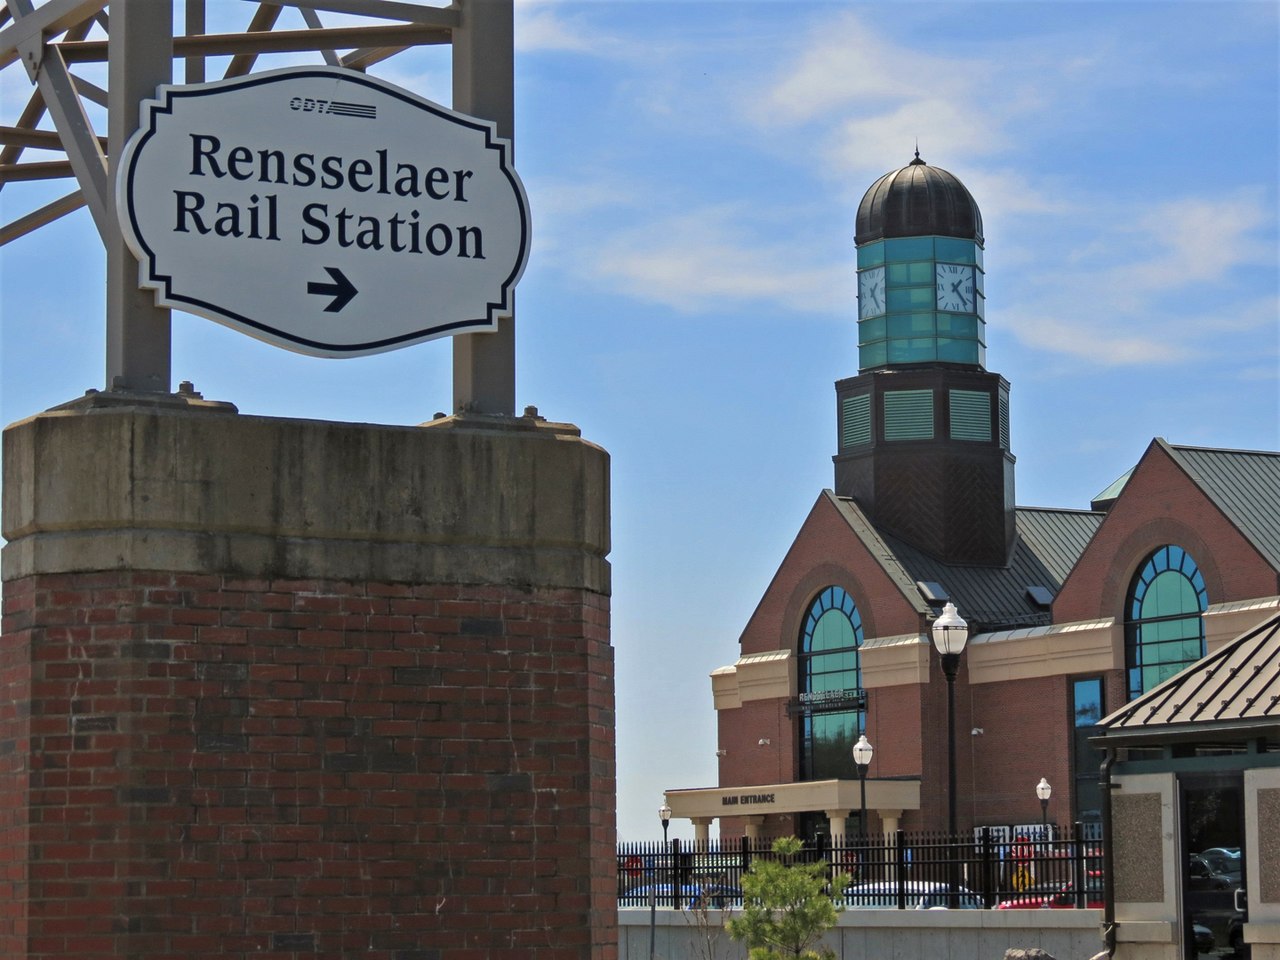 Rensselaer Rail Station